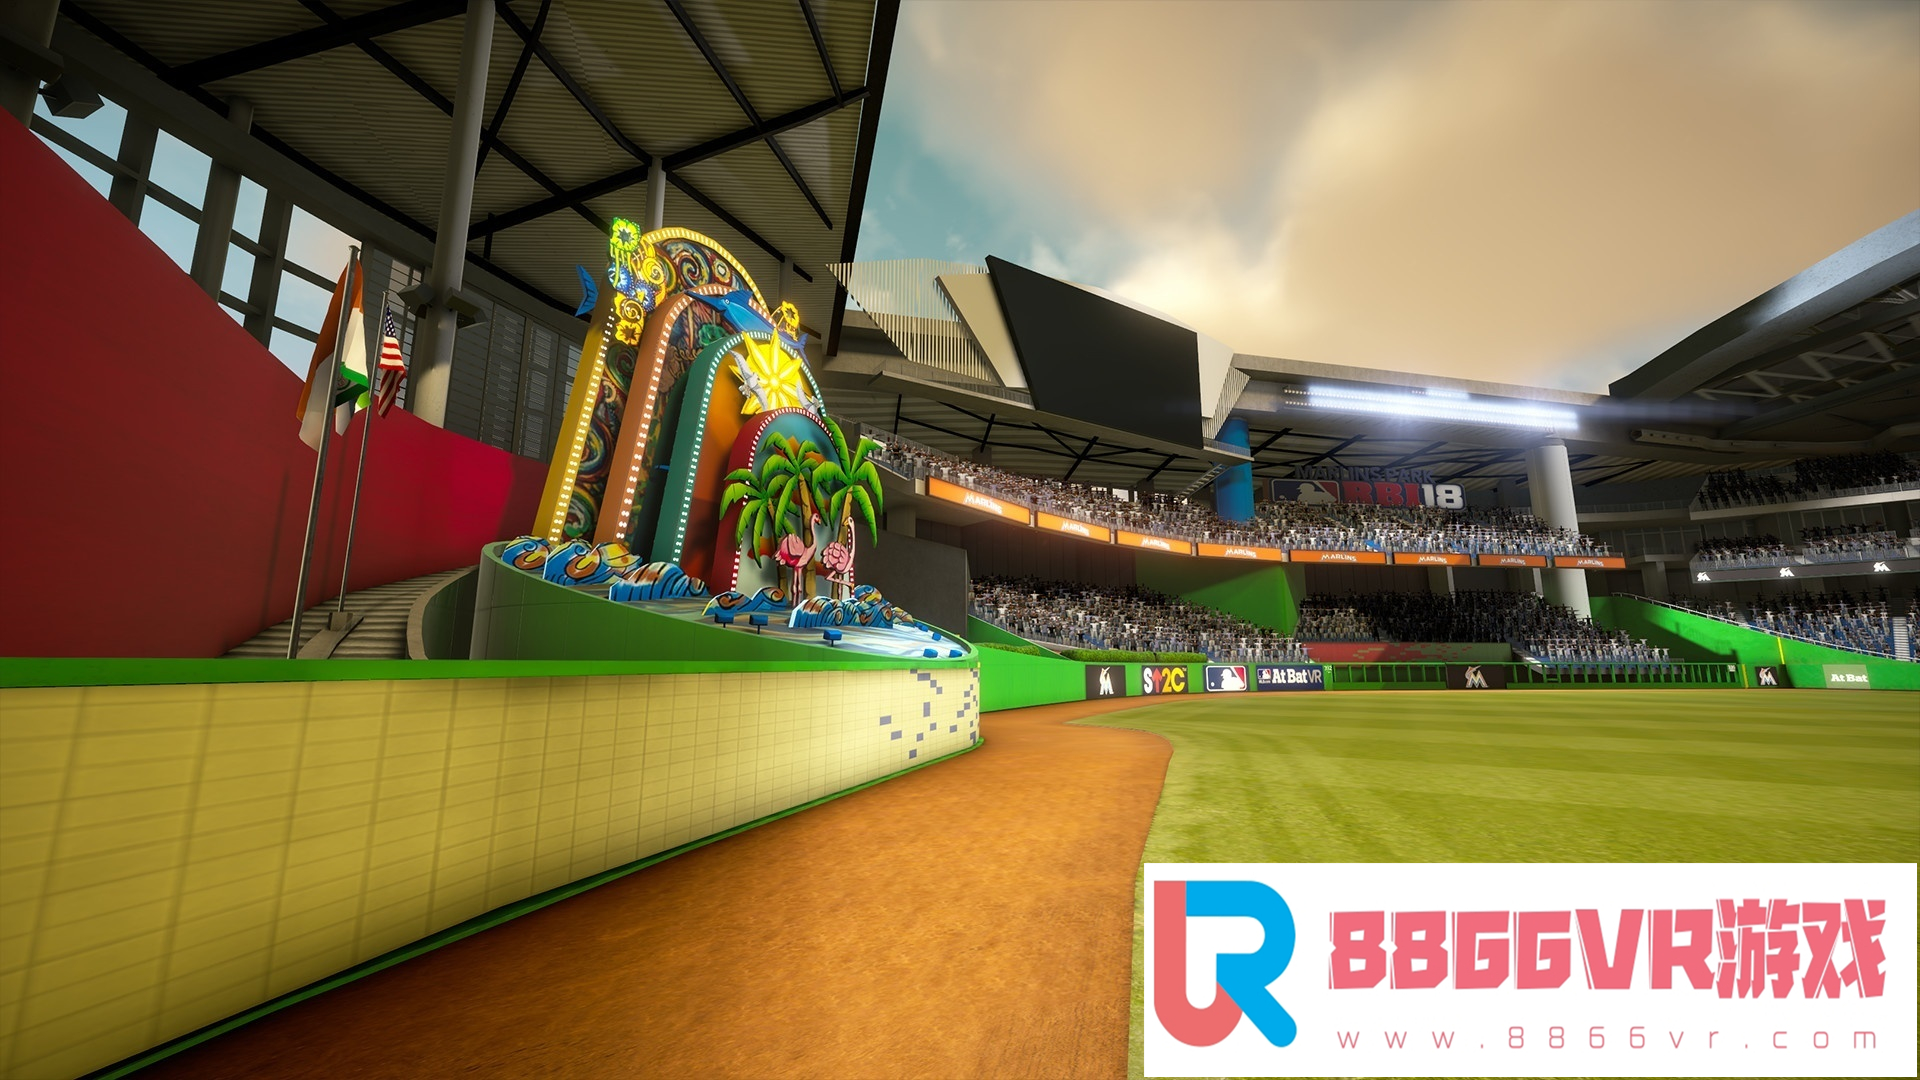 [VR交流学习] MLB本垒打 VR (MLB Home Run Derby VR) vr game crack8443 作者:蜡笔小猪 帖子ID:1098 破解